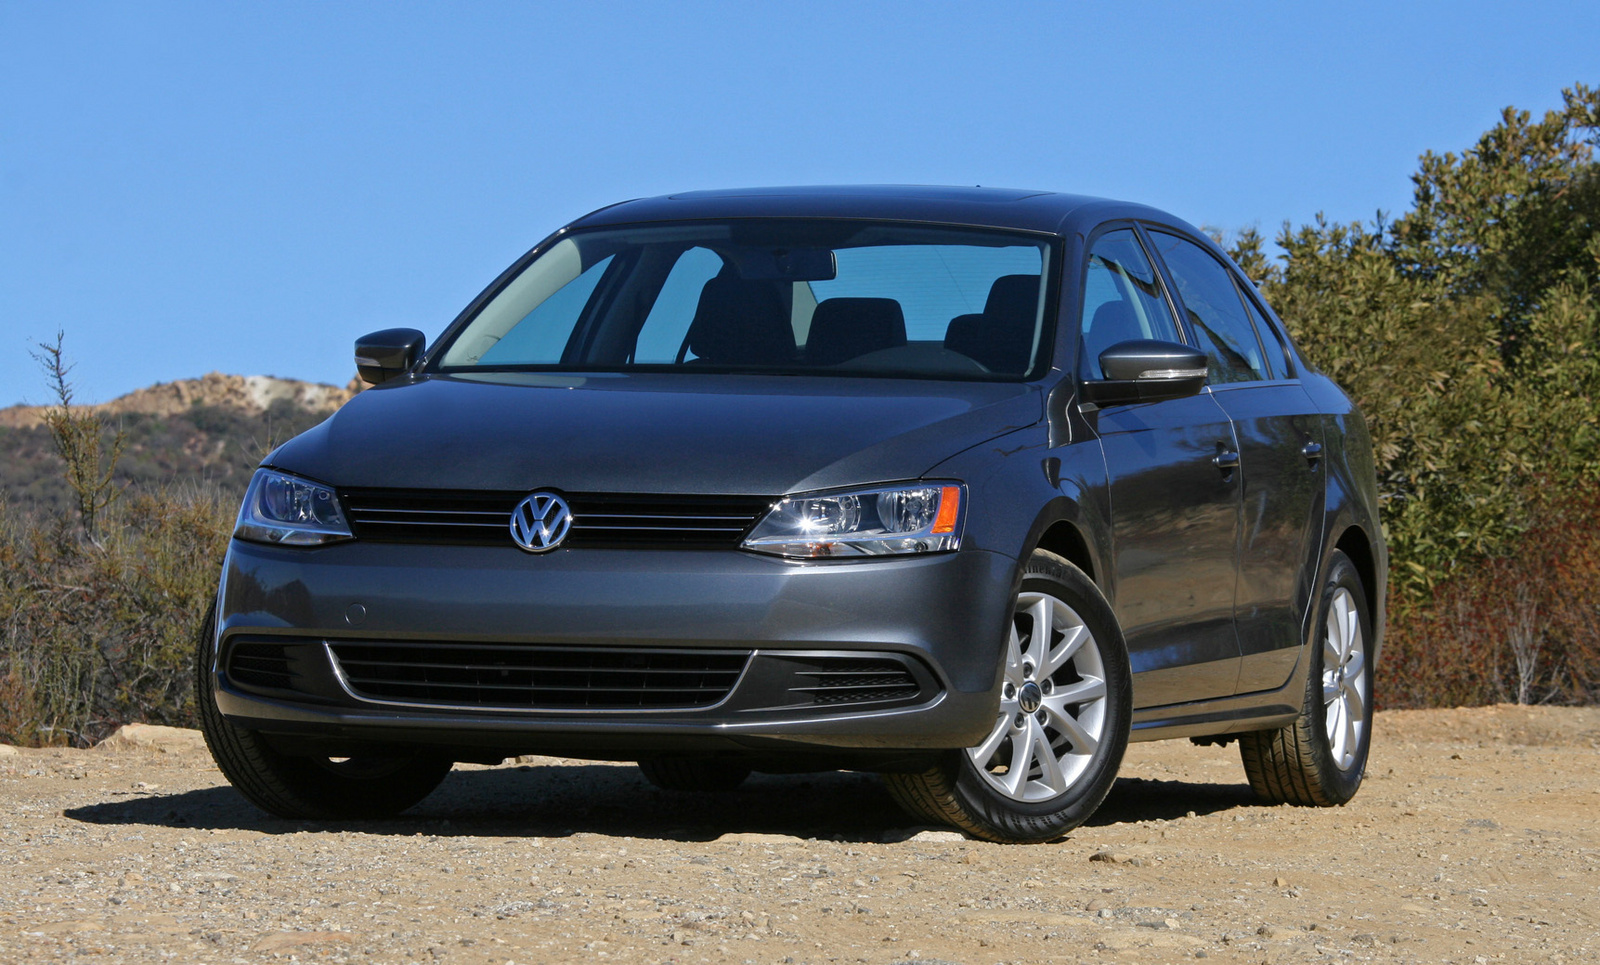 2014 Volkswagen Jetta: Prices, Reviews & Pictures - CarGurus